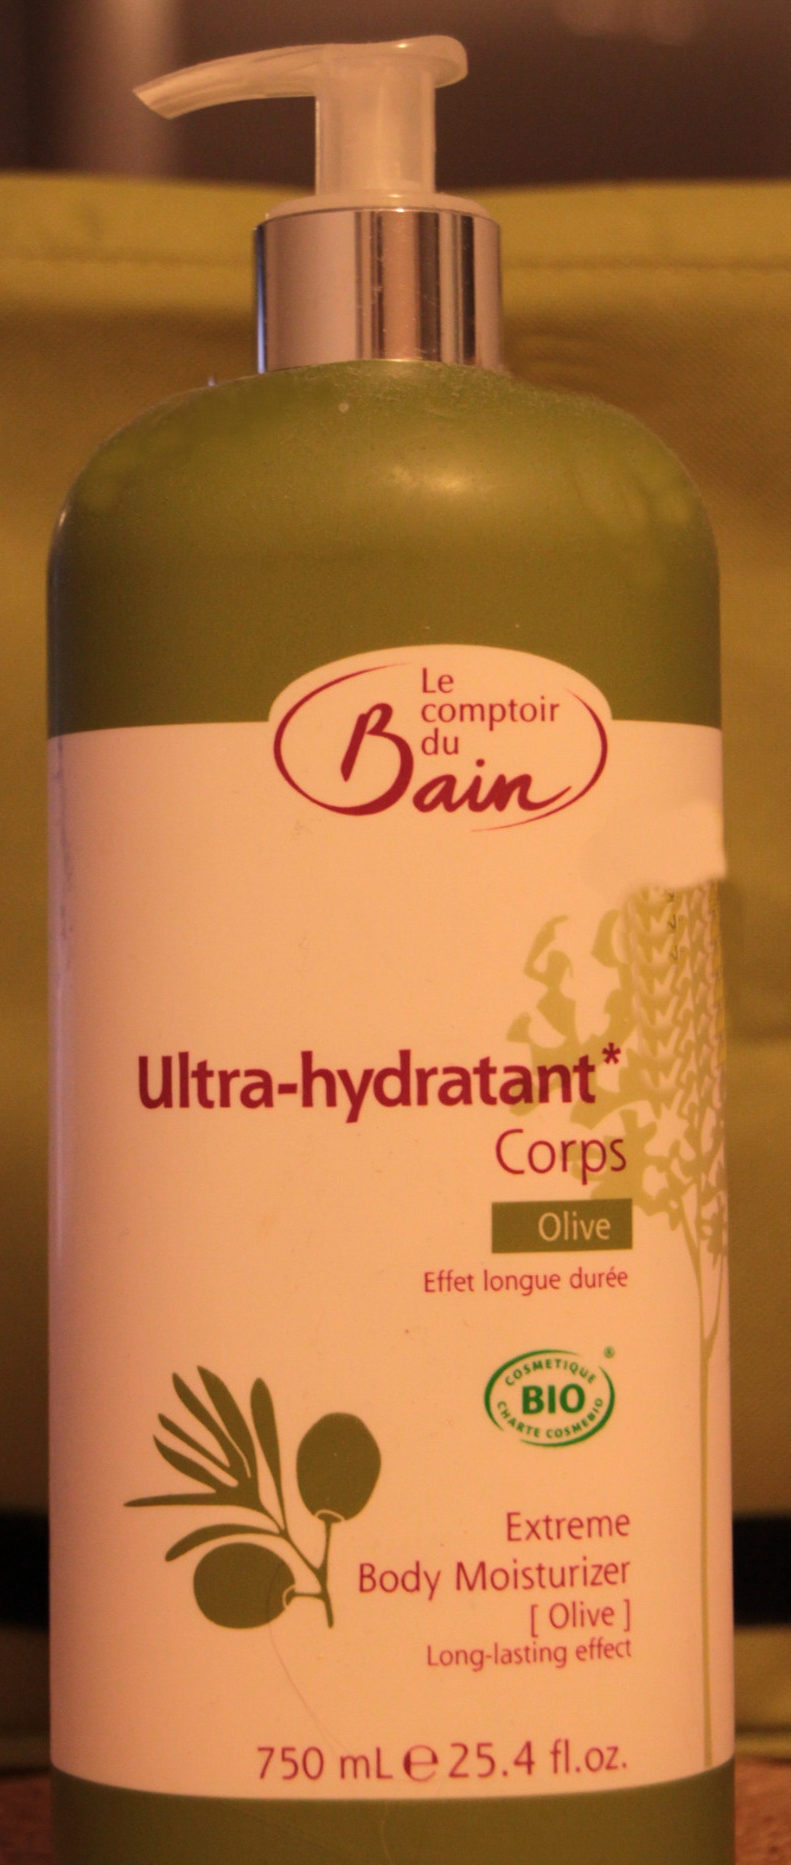 Ultra-hydratant Corps Olive - Produit - fr